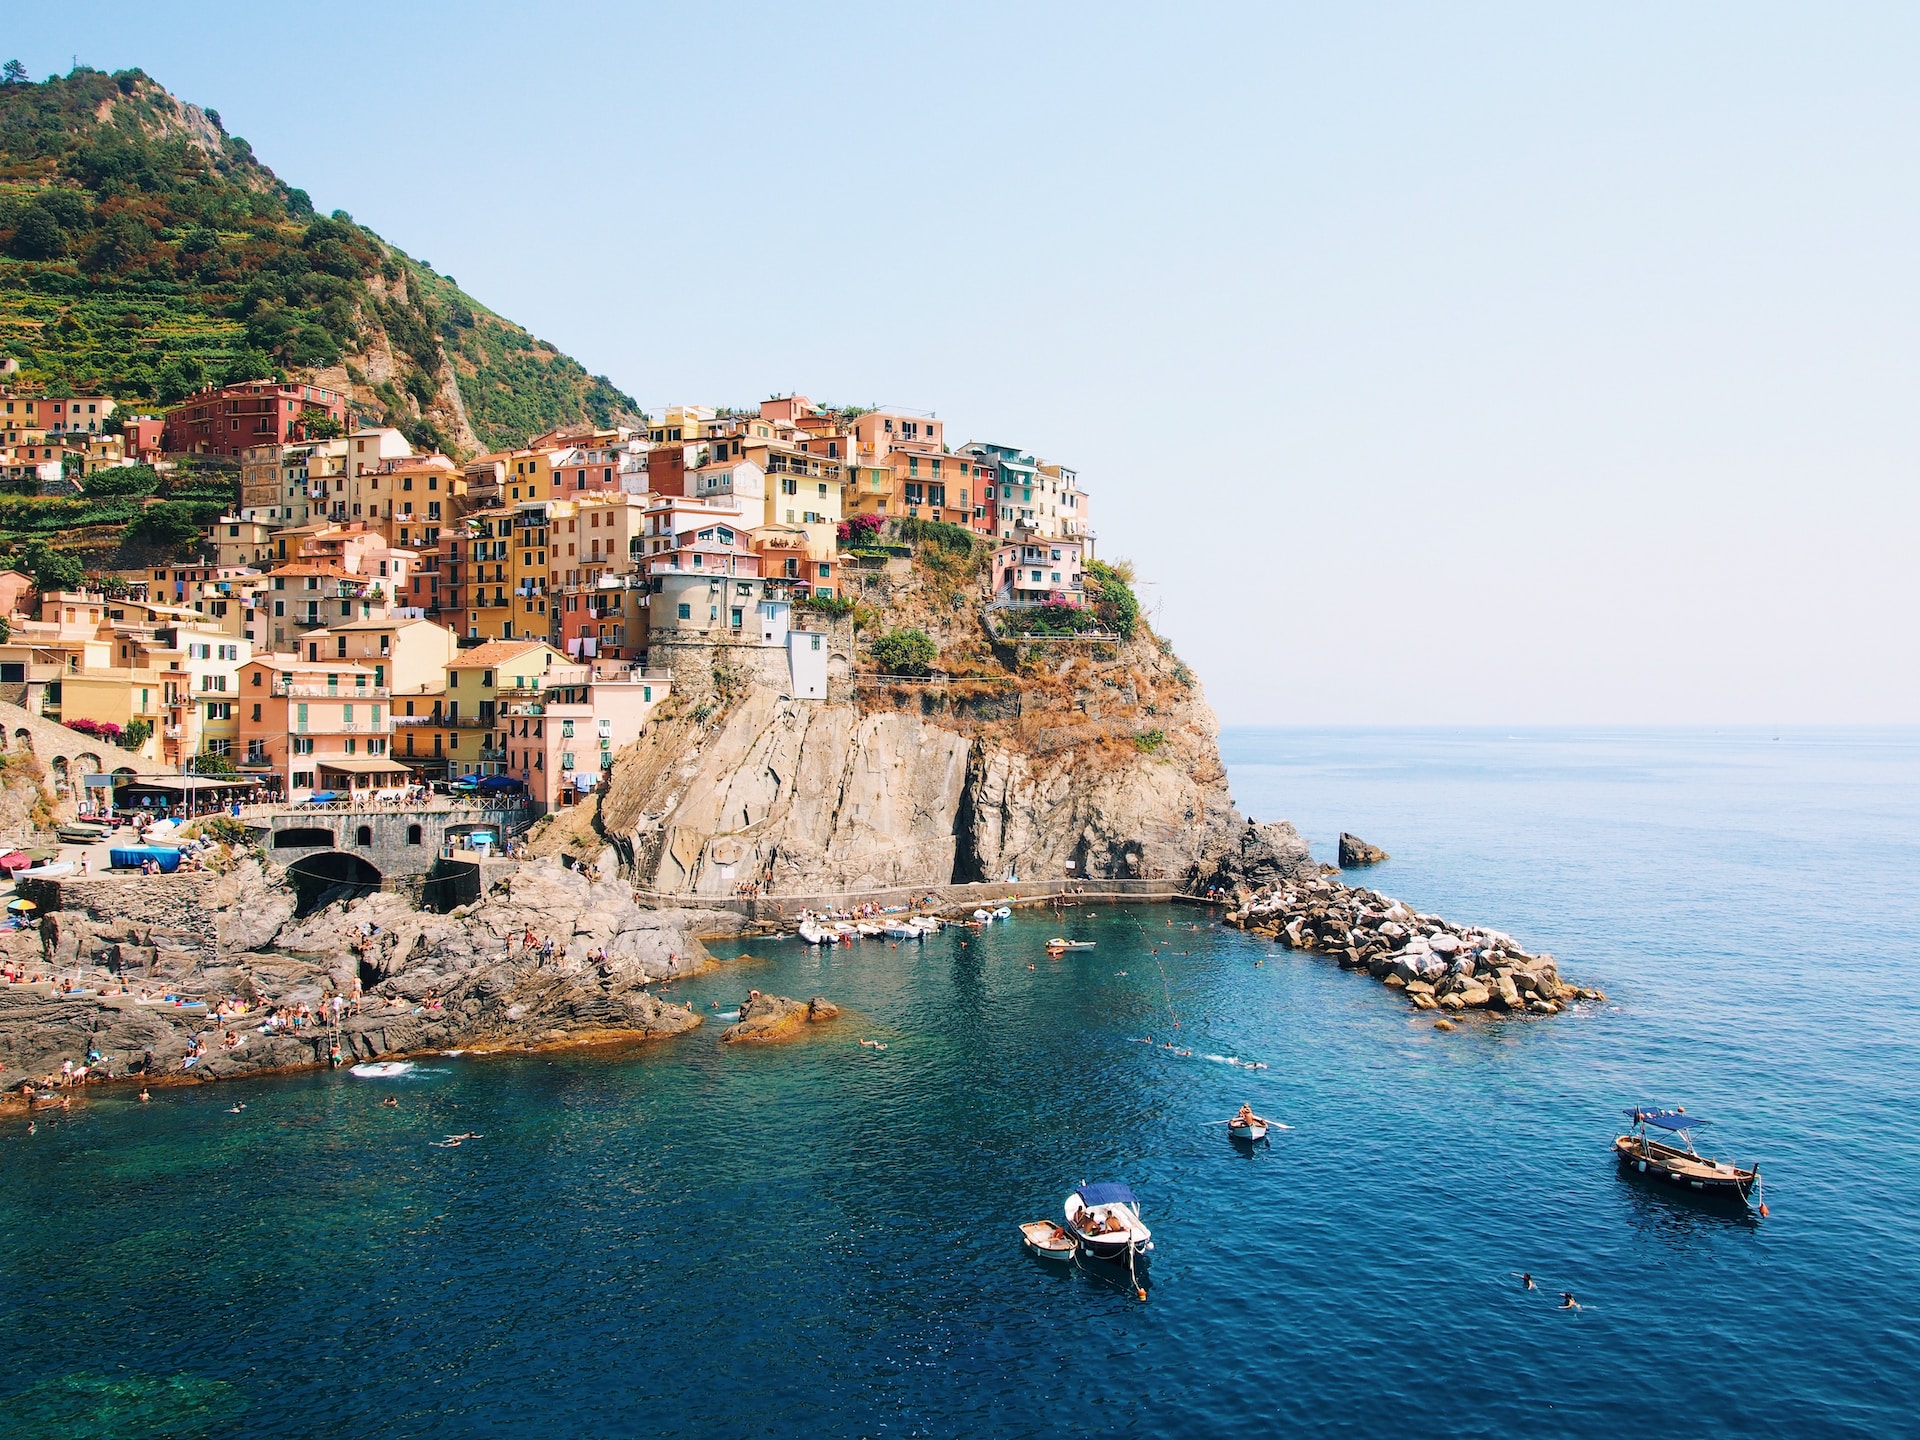 A seaside village in Cinque Terre, Italy  (photo: Mika Korhonen)